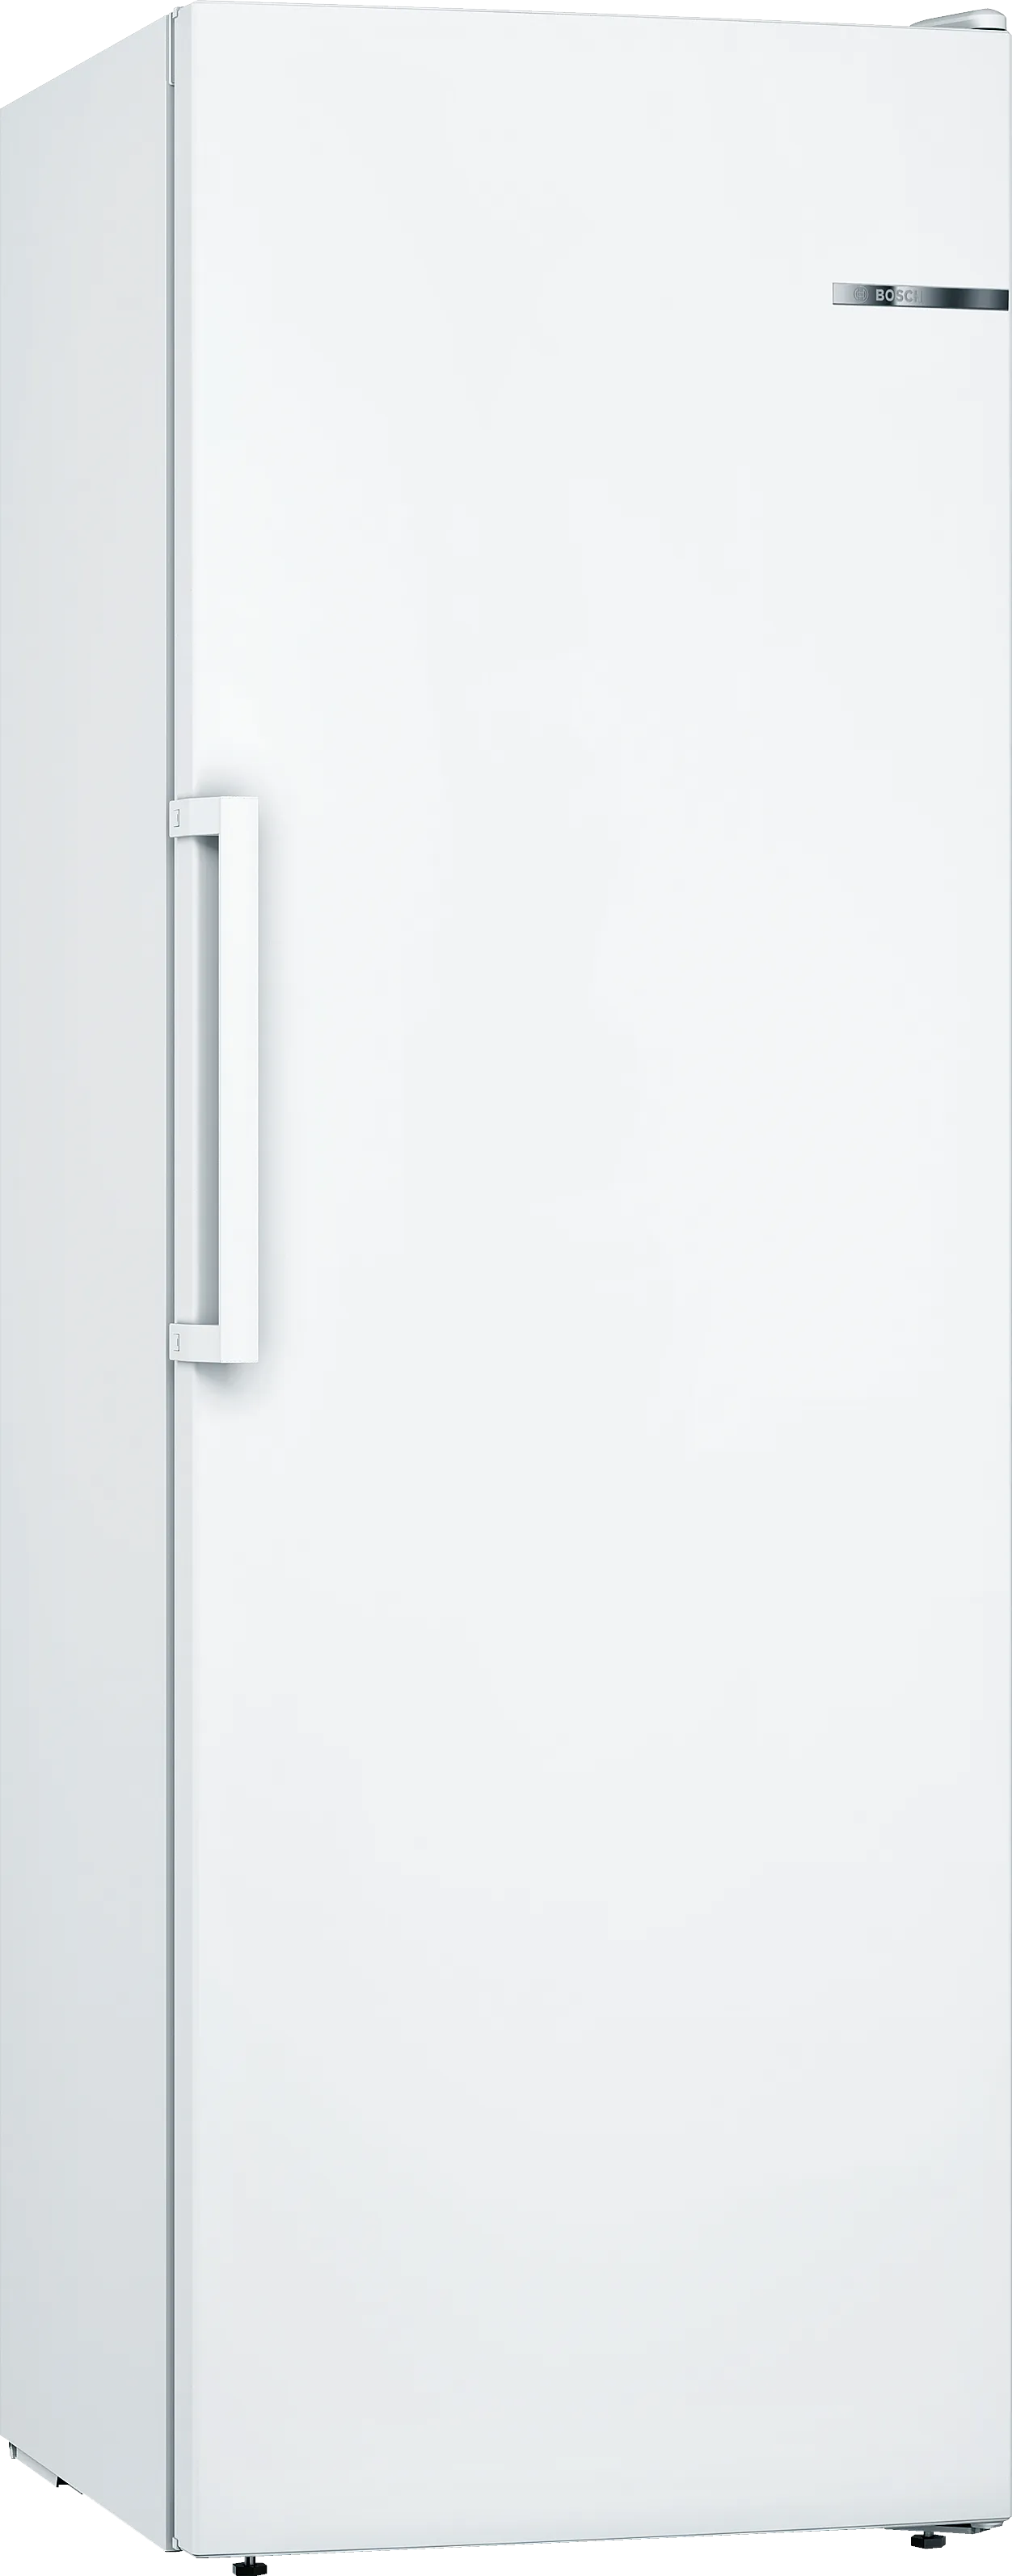 Series 4 Freestanding Freezer 176 x 60 cm White 